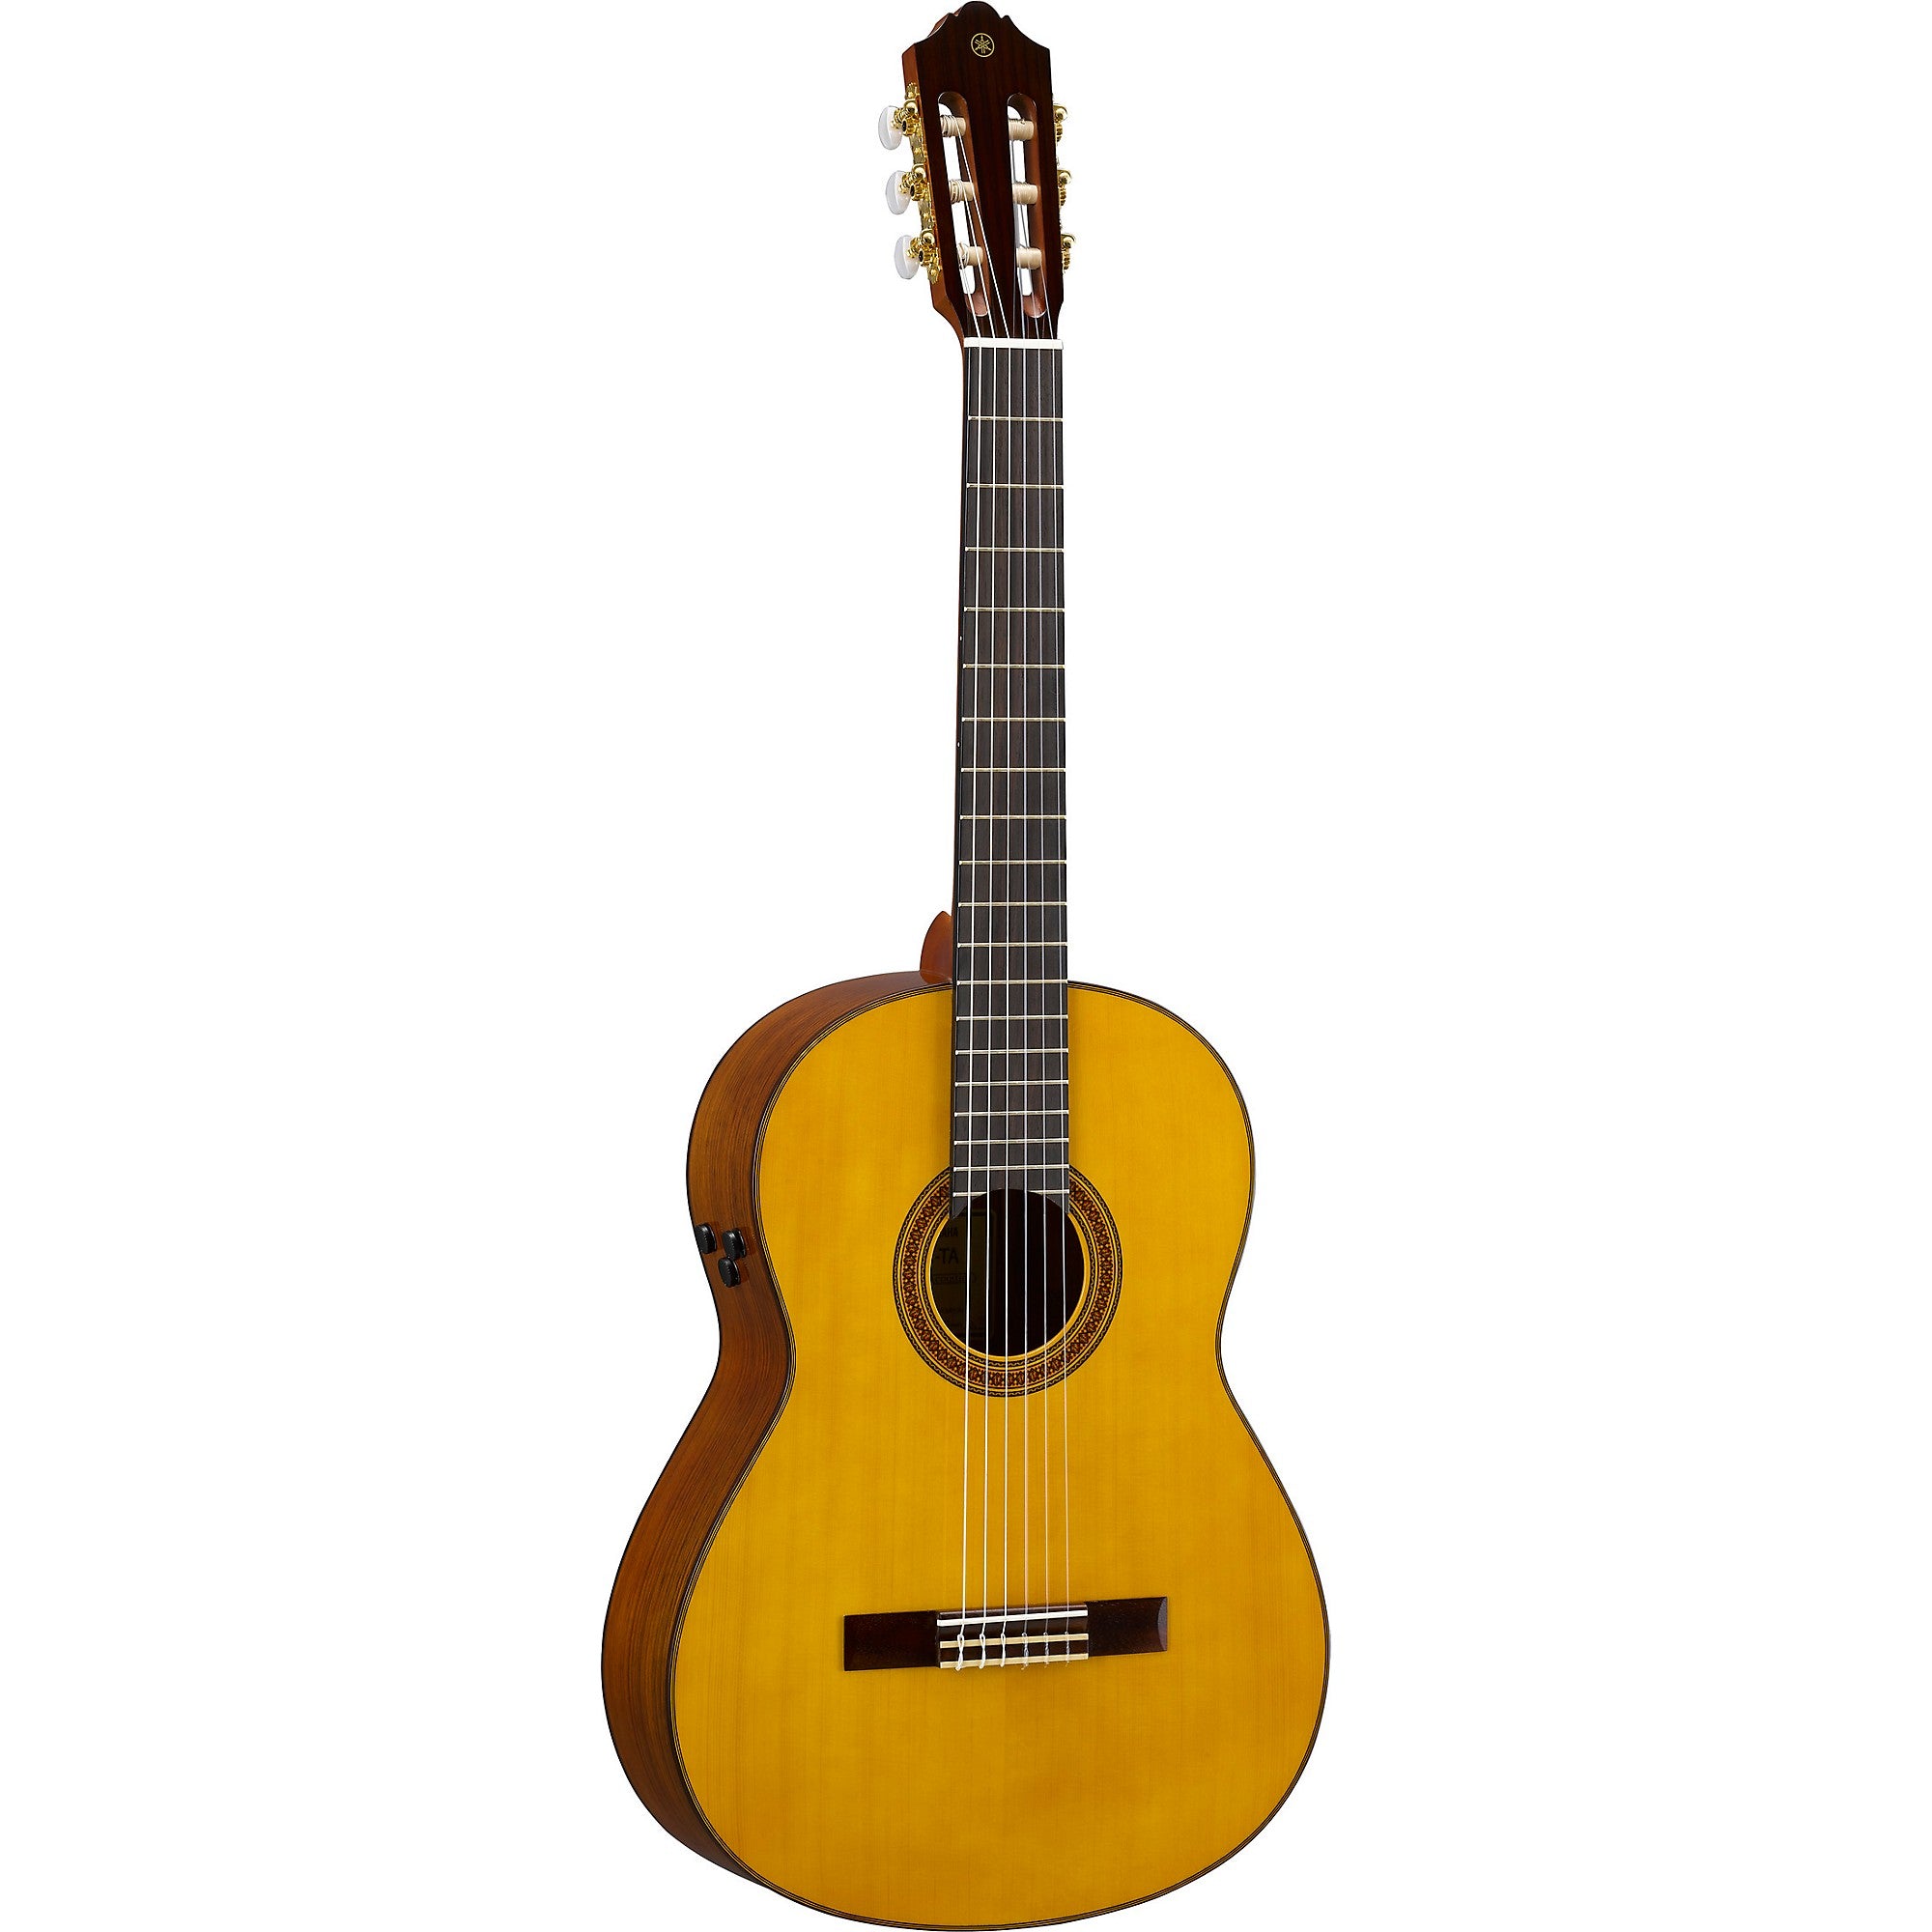 Yamaha CGTA A/E Trans-acoustic Classical Guitar, Natural